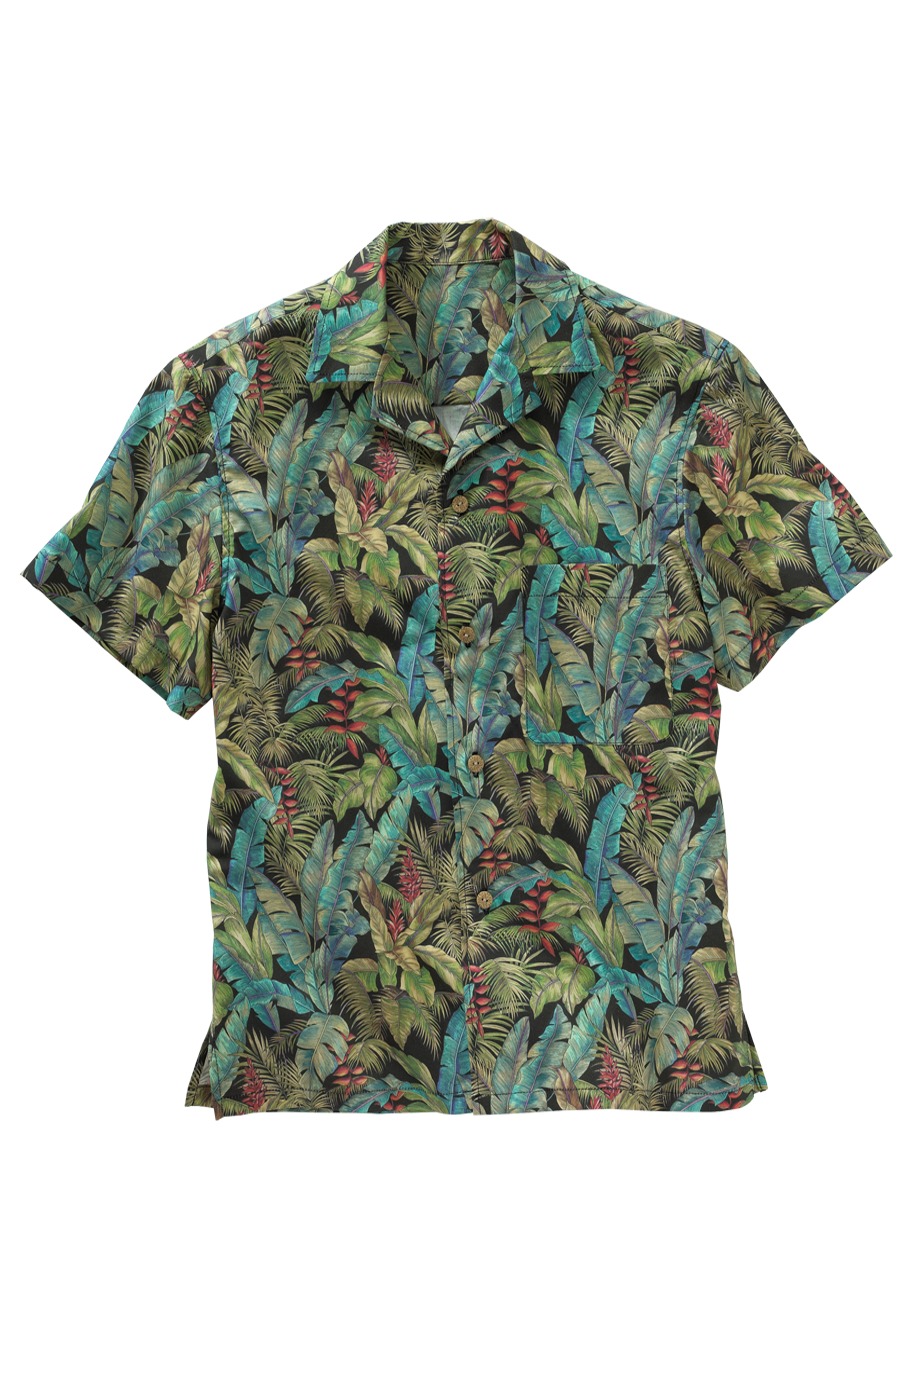 Edwards Garment 1032 - Tropical Leaf Camp Shirt